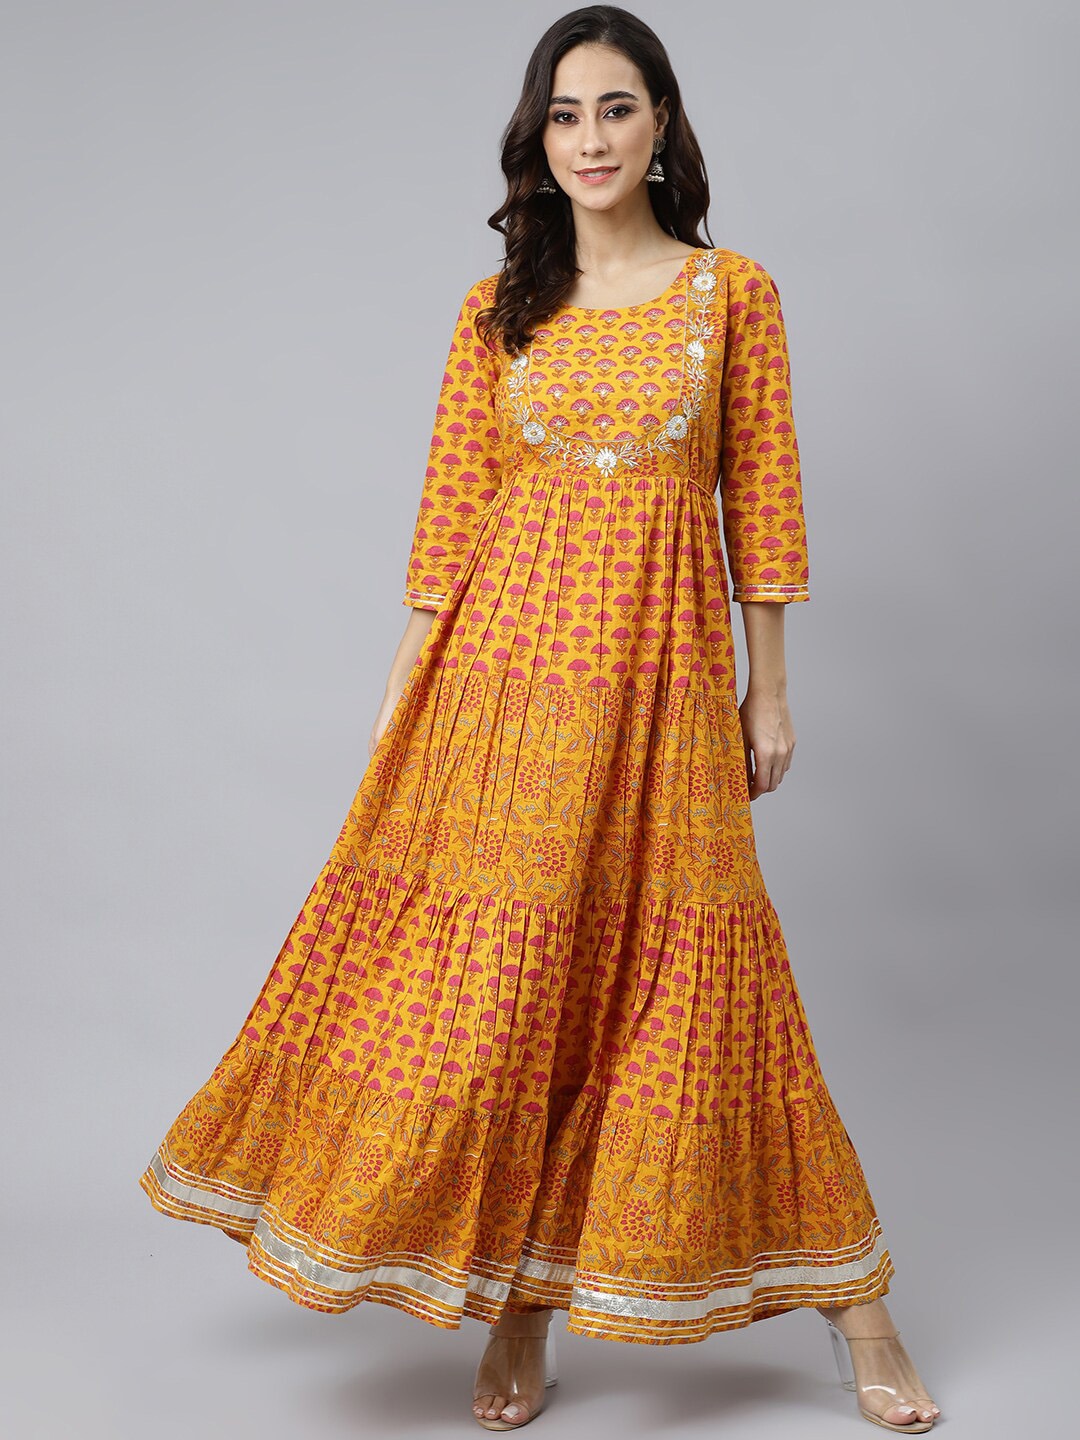 Janasya Mustard Yellow Ethnic Maxi Round Floral Neck Dress Price in India